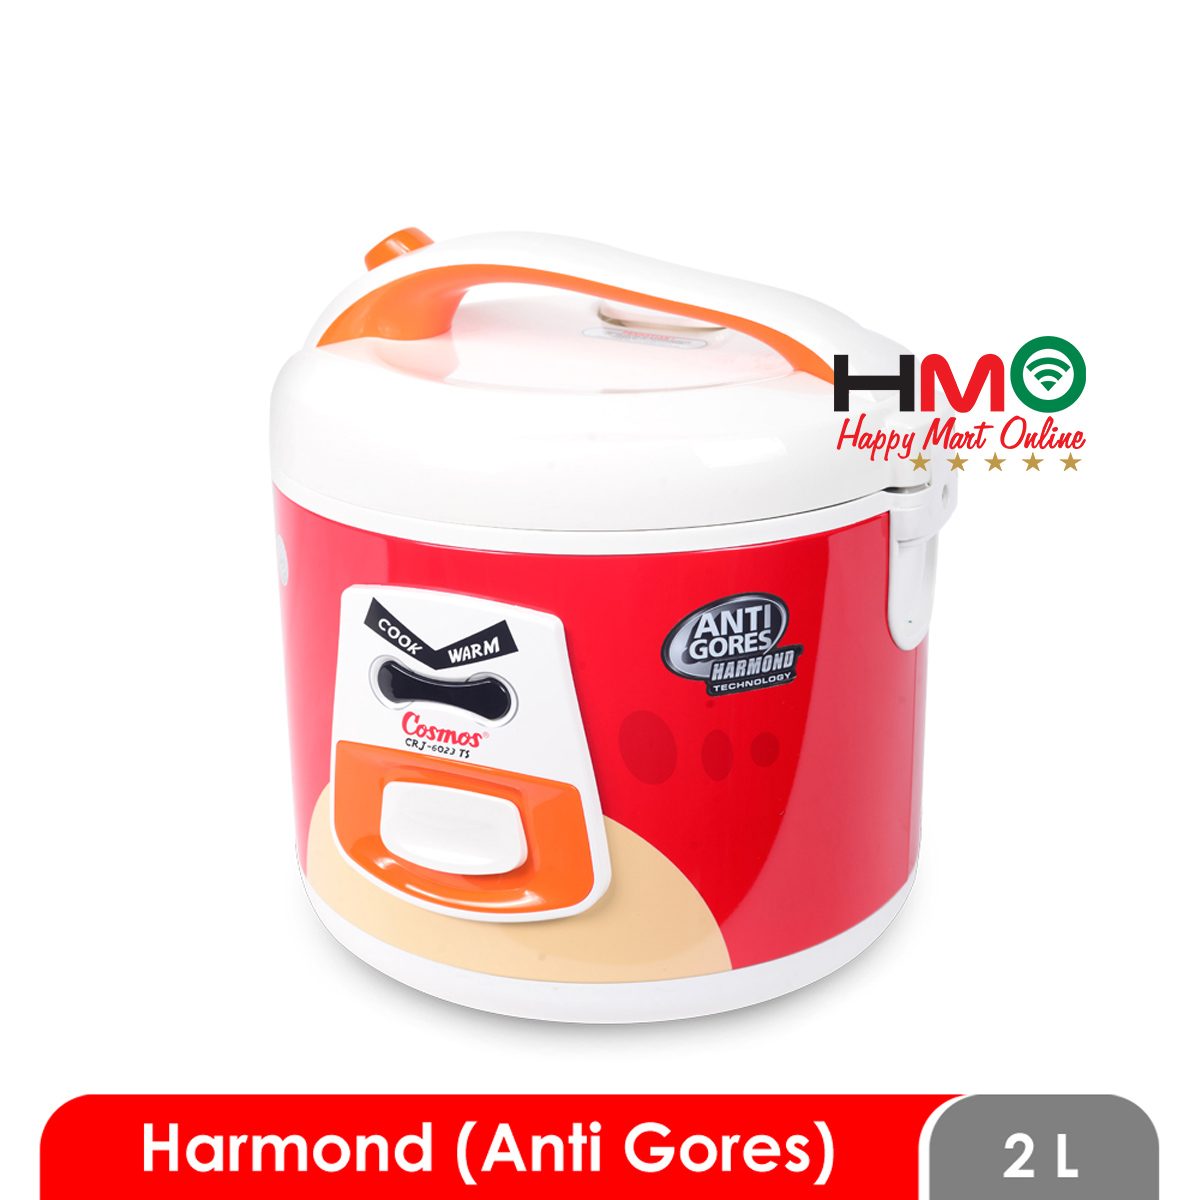 Cosmos Harmond Magic Com 2 Liter Rice Cooker Cosmos CRJ 6023N CRJ 6023 N CRJ6023N Lazada Indonesia